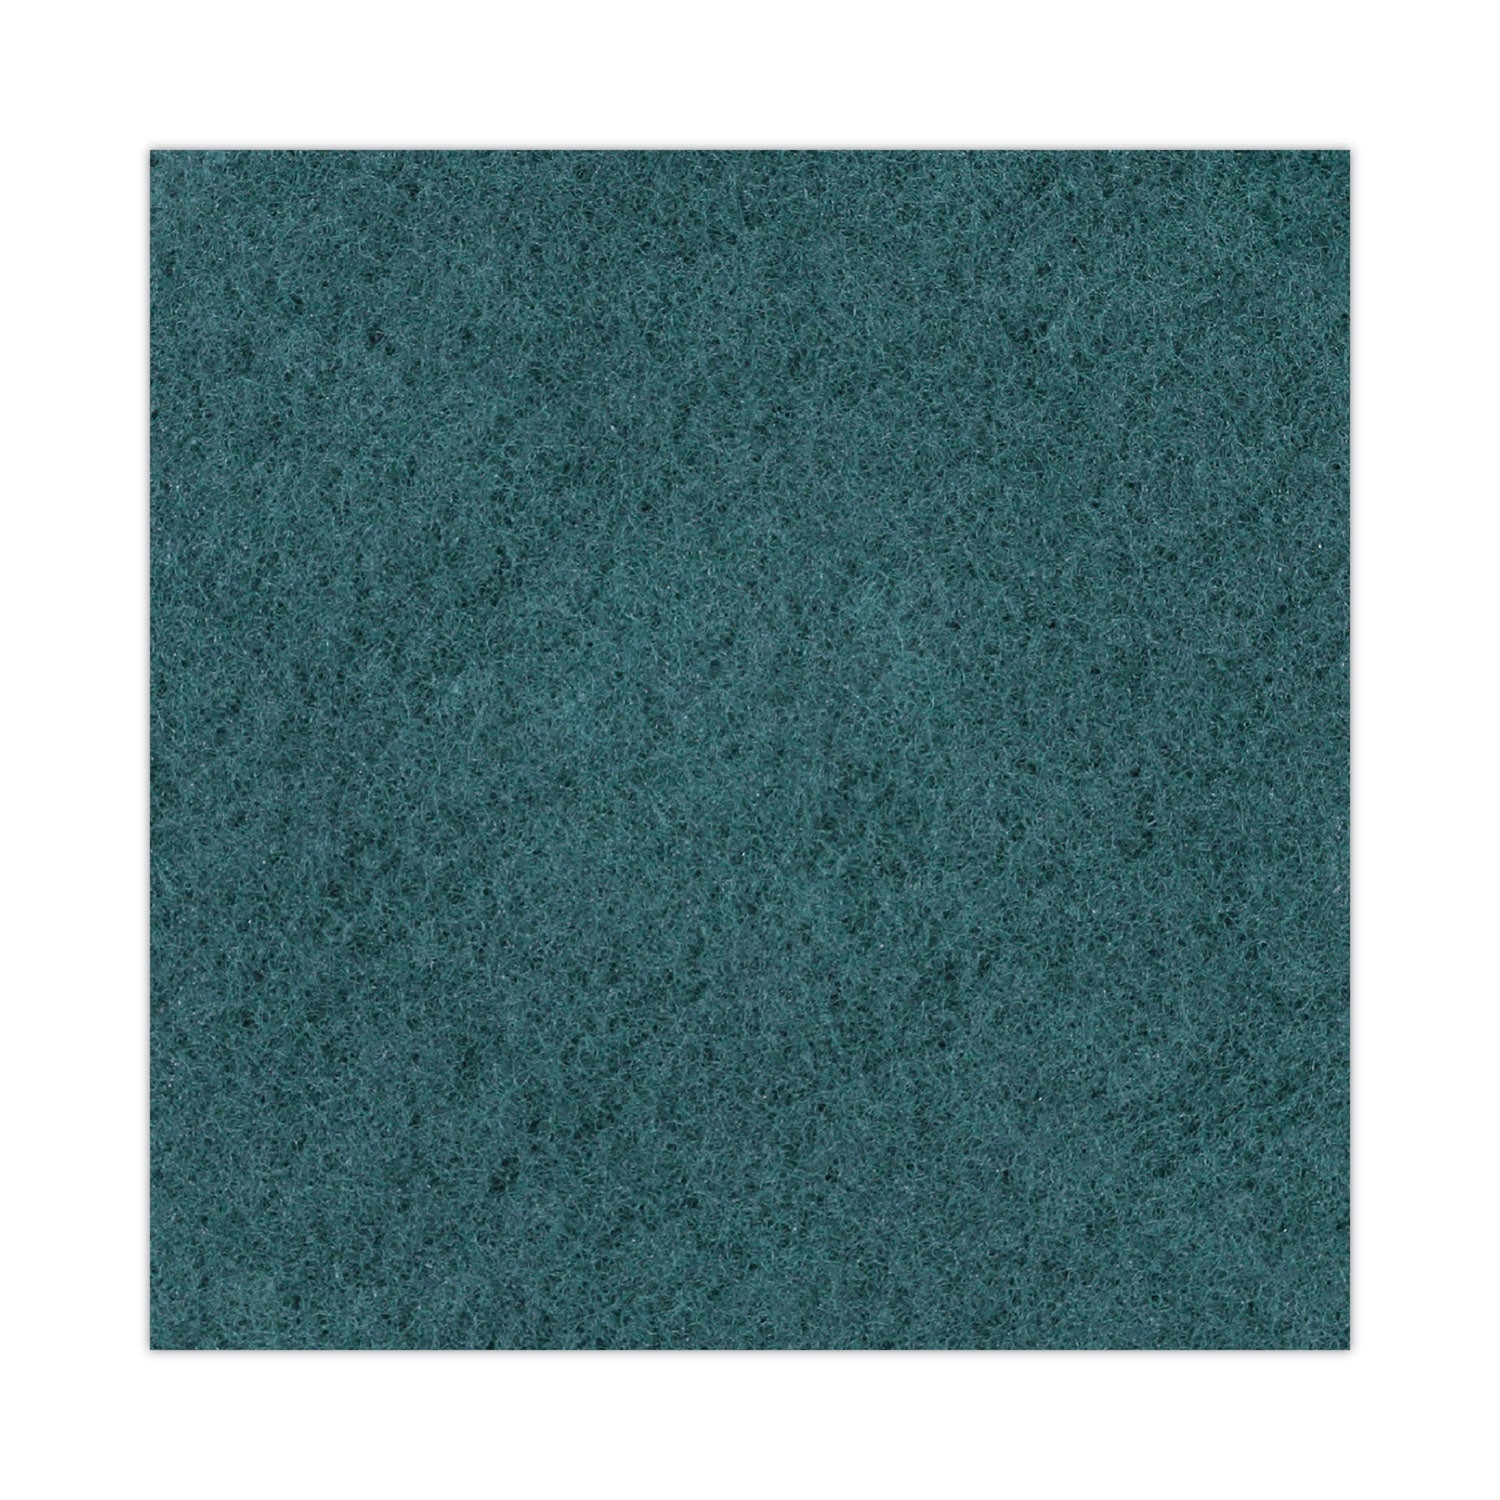 Heavy-Duty Scrubbing Floor Pads, 20" Diameter, Green, 5/Carton - 